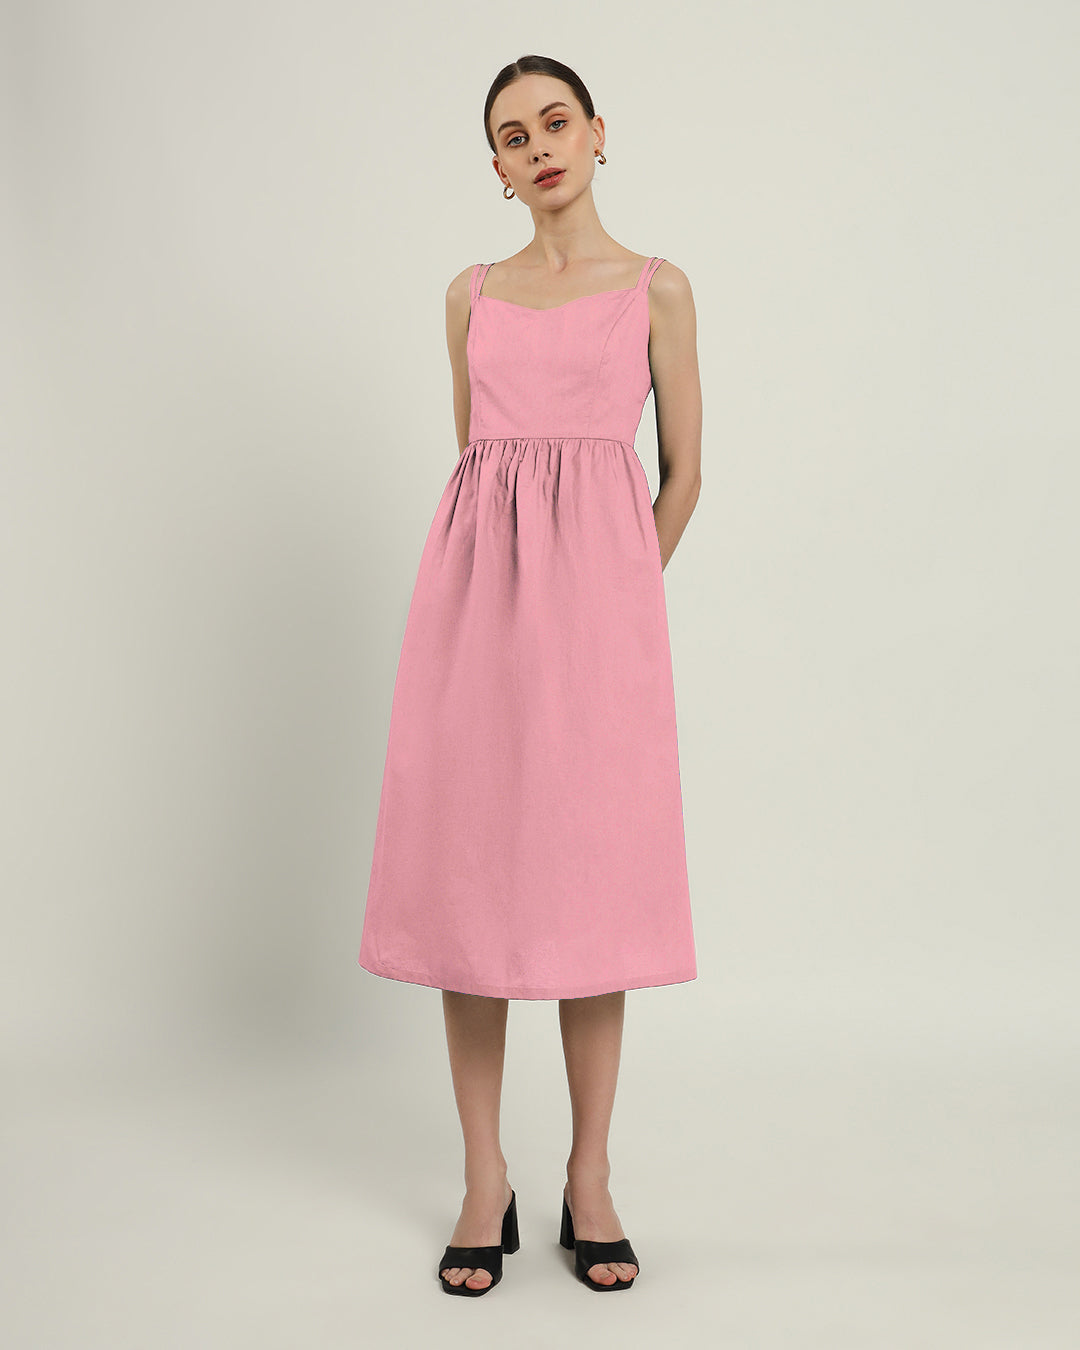 The Haiti Fondant Pink Cotton Dress